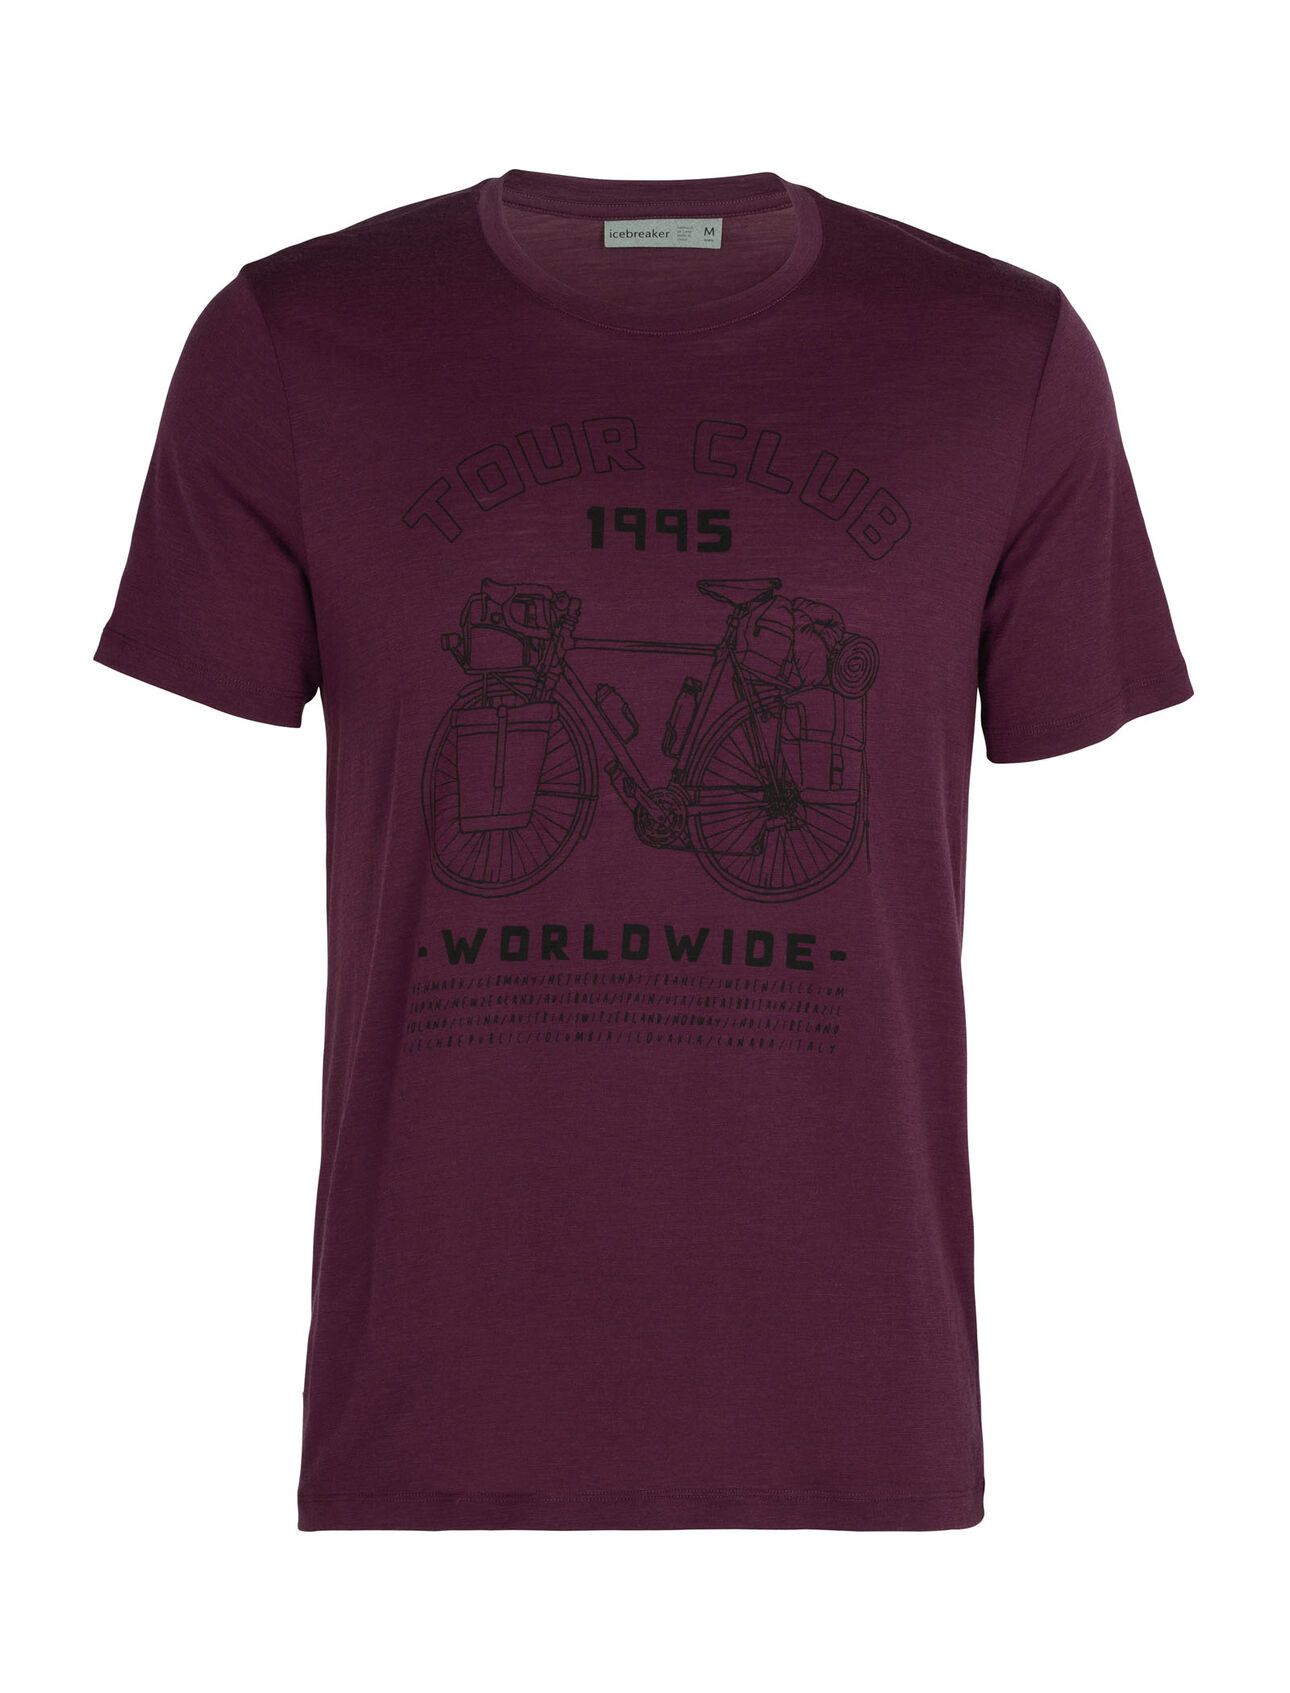 T-shirt in lana merino Tech Lite Short Sleeve Crewe Tour Club 1995